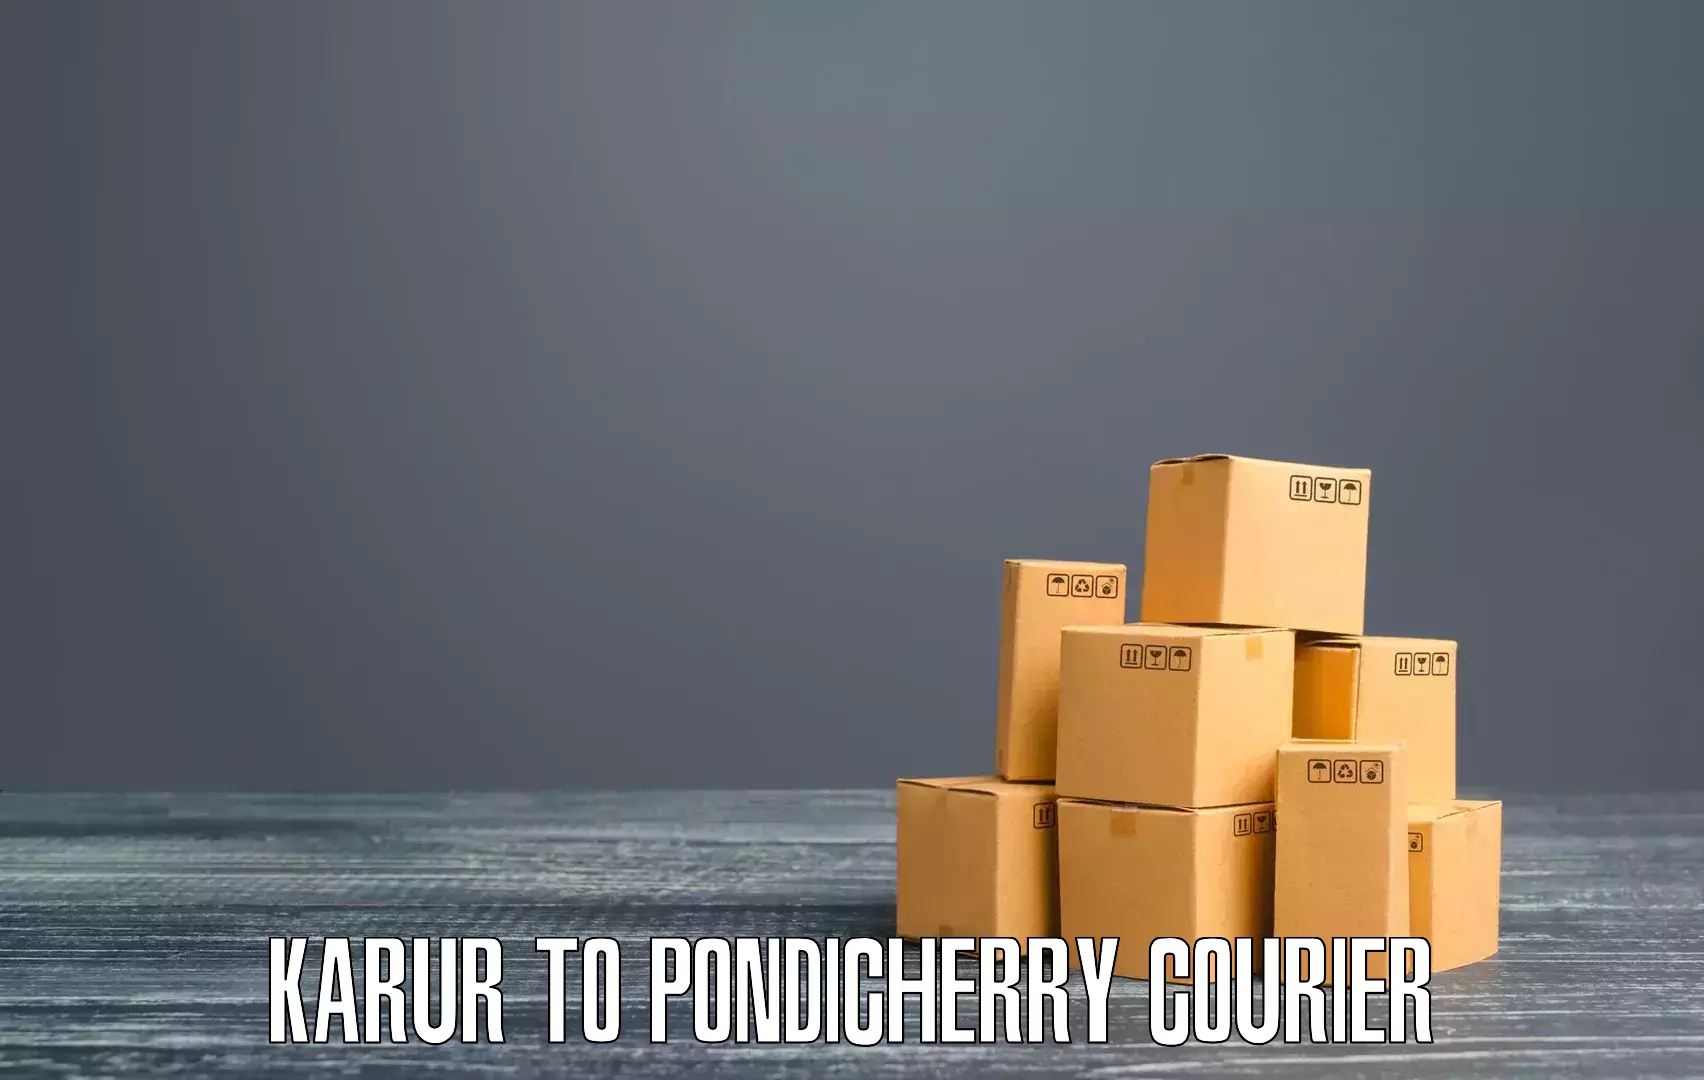 Customer-centric shipping Karur to Pondicherry